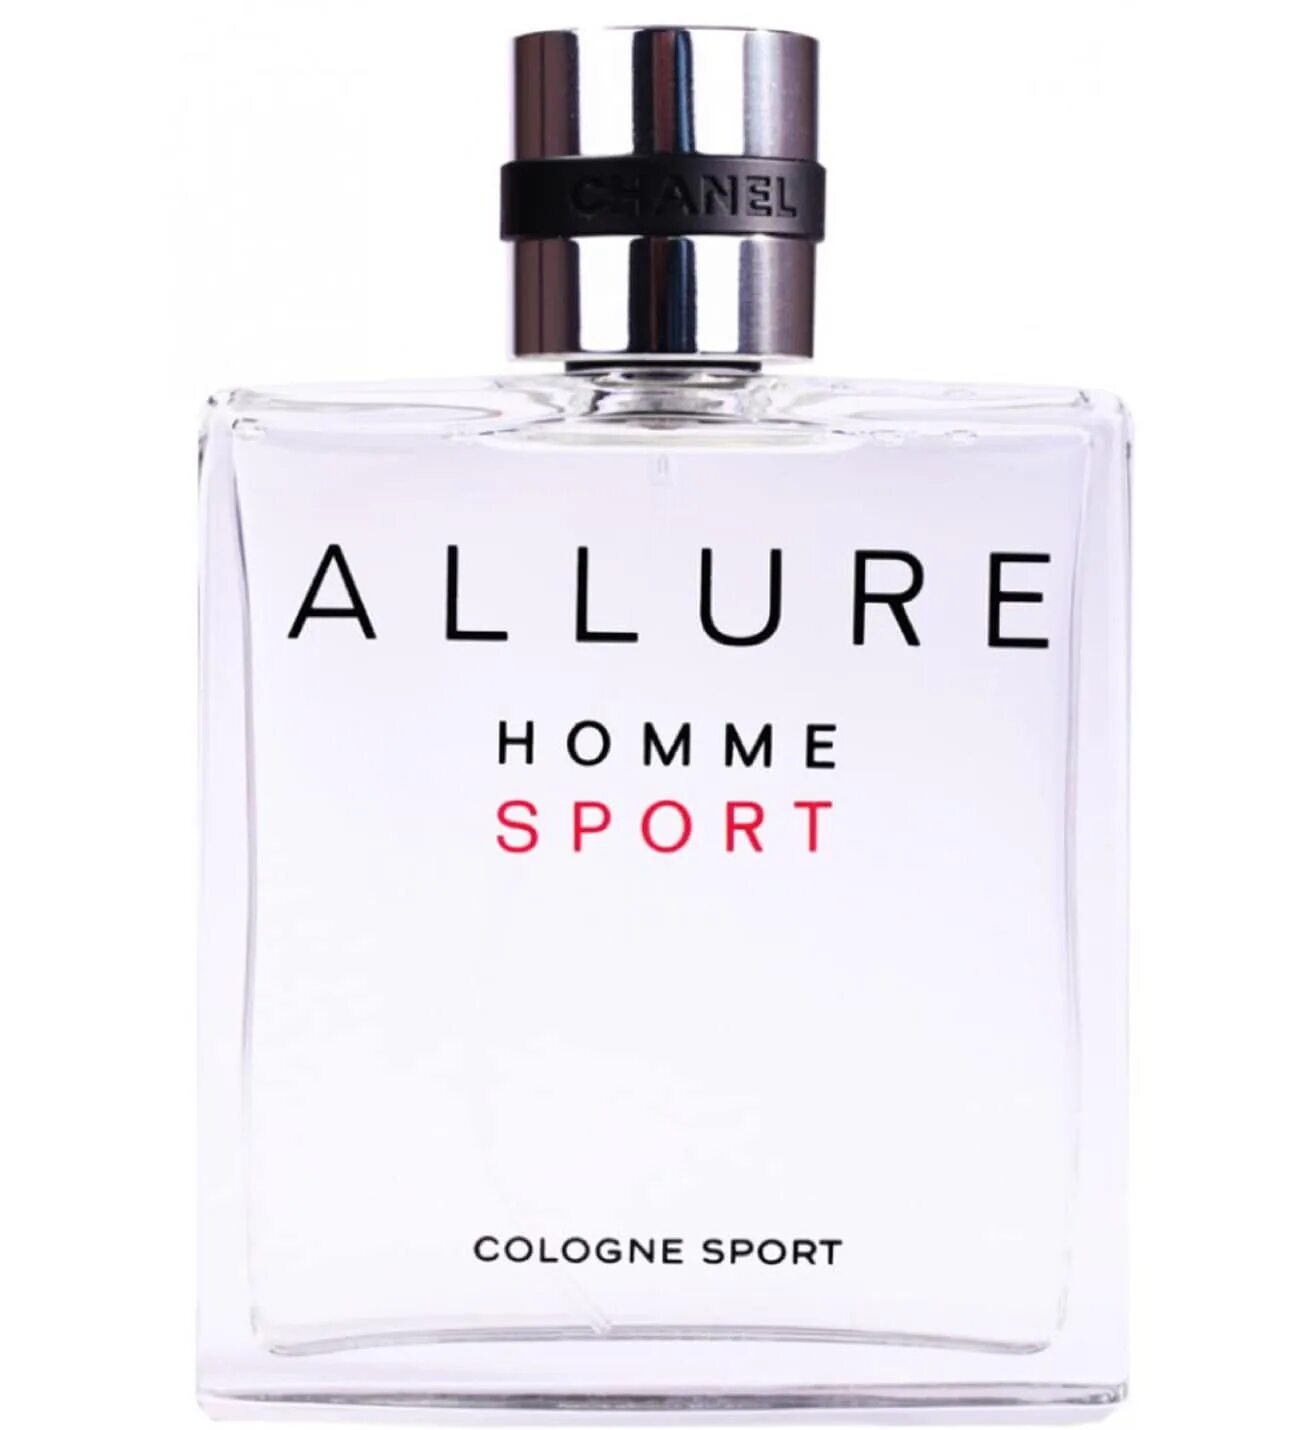 Chanel cologne sport. Chanel Allure homme Sport Cologne. Chanel homme Sport Cologne. Chanel Allure homme Sport. Шанель хом спорт мужские.